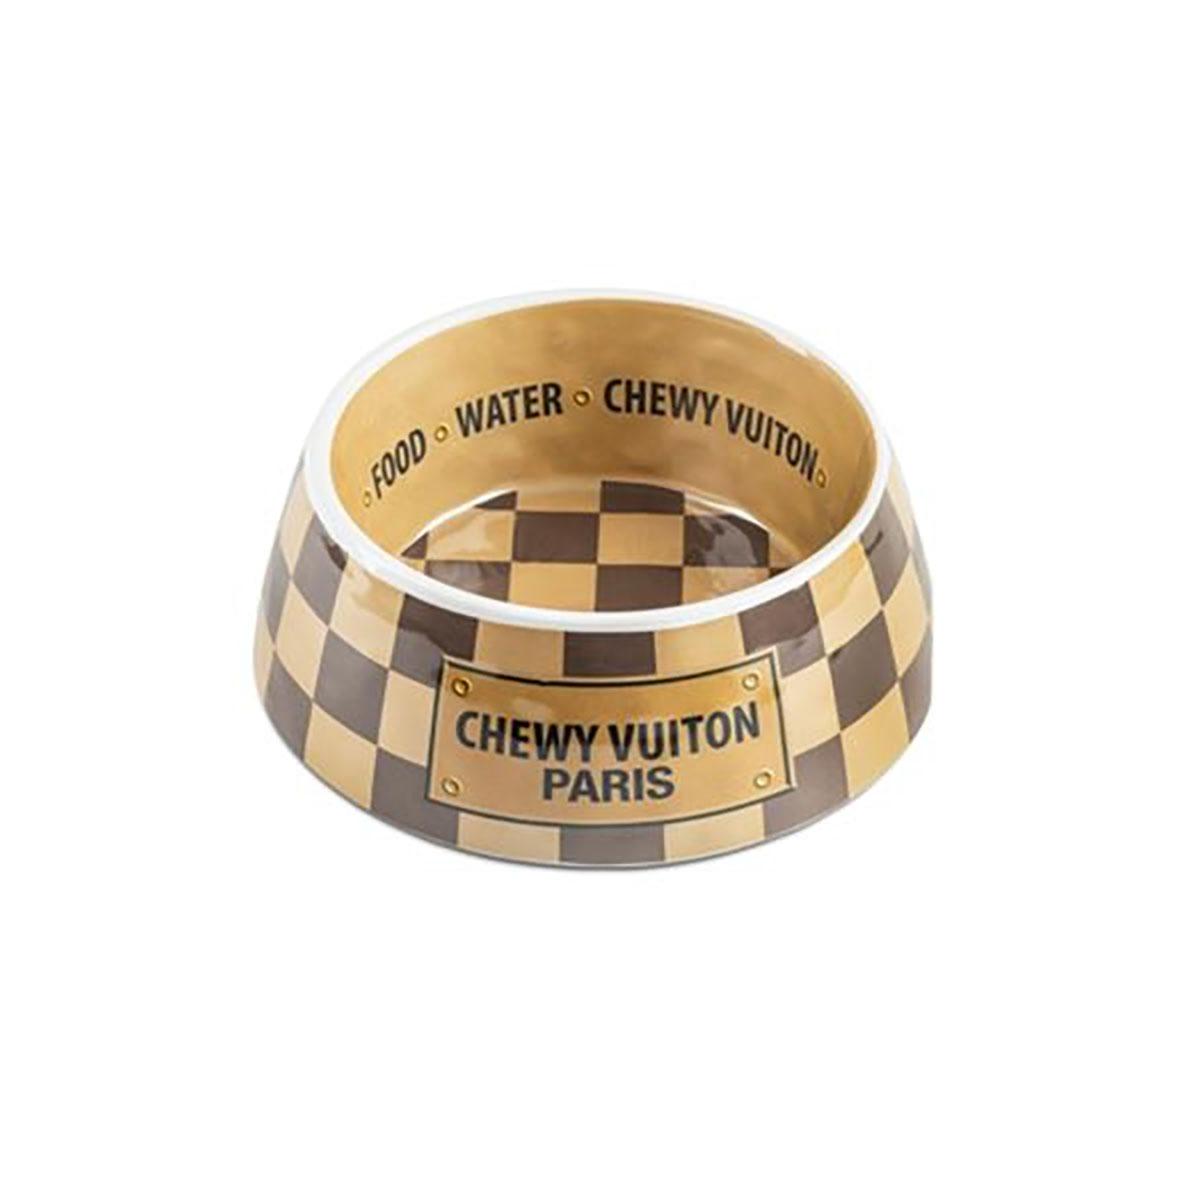 Haute Diggity Dog Chewy Vuiton Dog Bowl - Checker